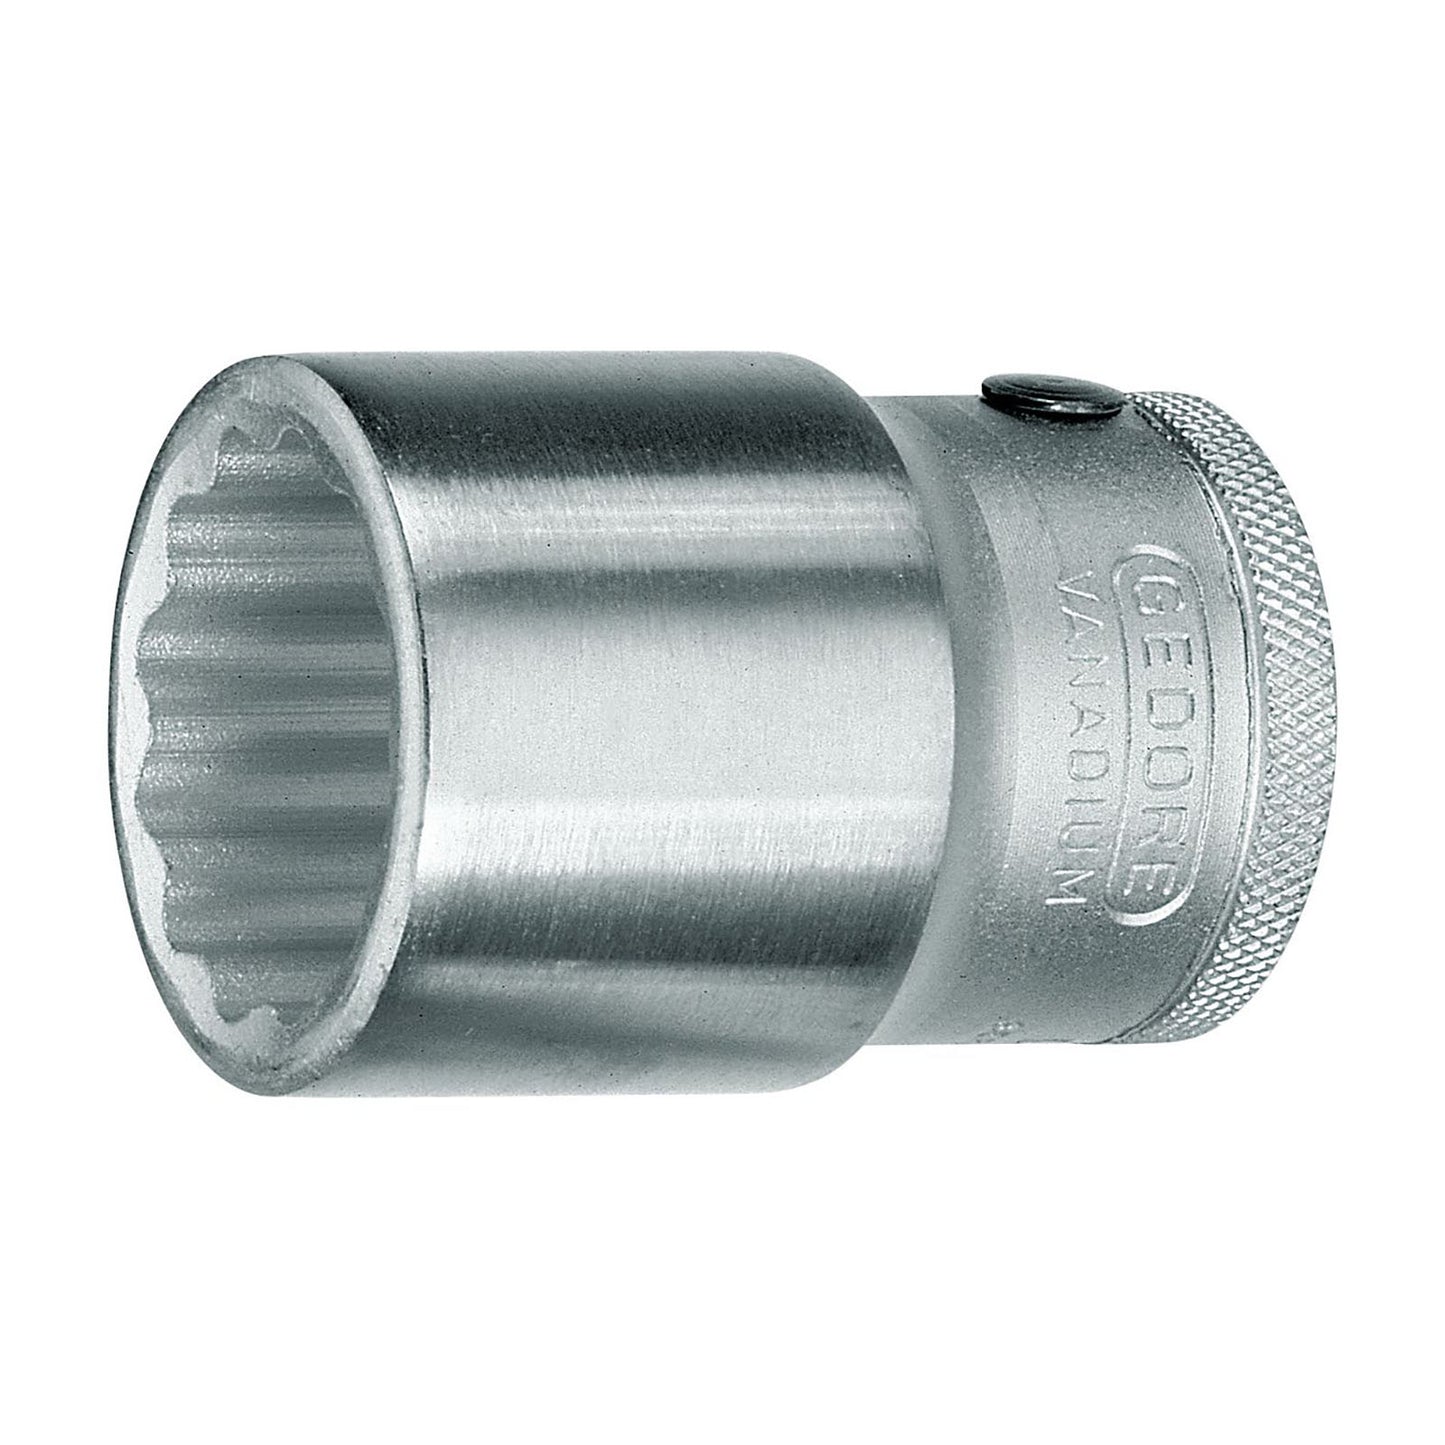 GEDORE D 32 41 - Vaso Unit Drive 3/4", 41 mm (6273050)